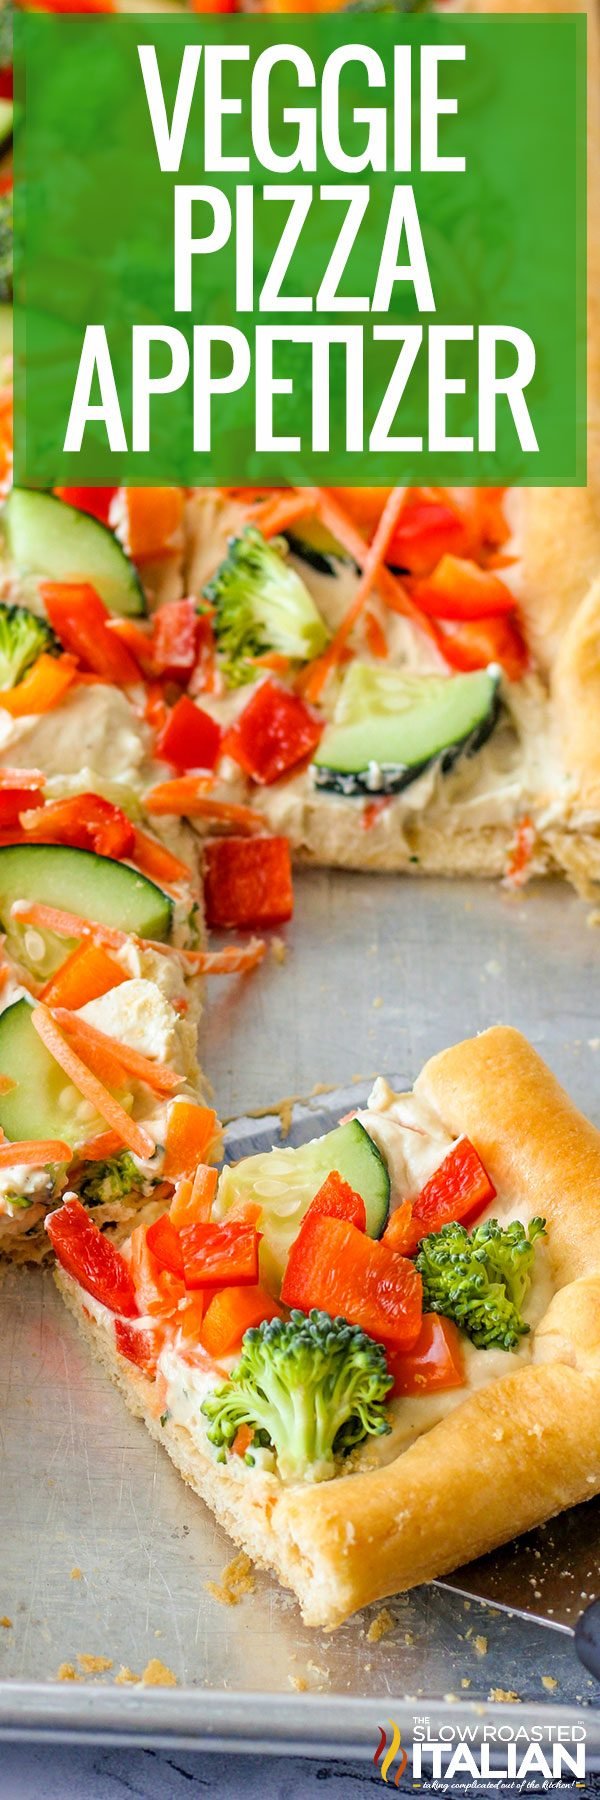 titled image for veggie pizza appetizer